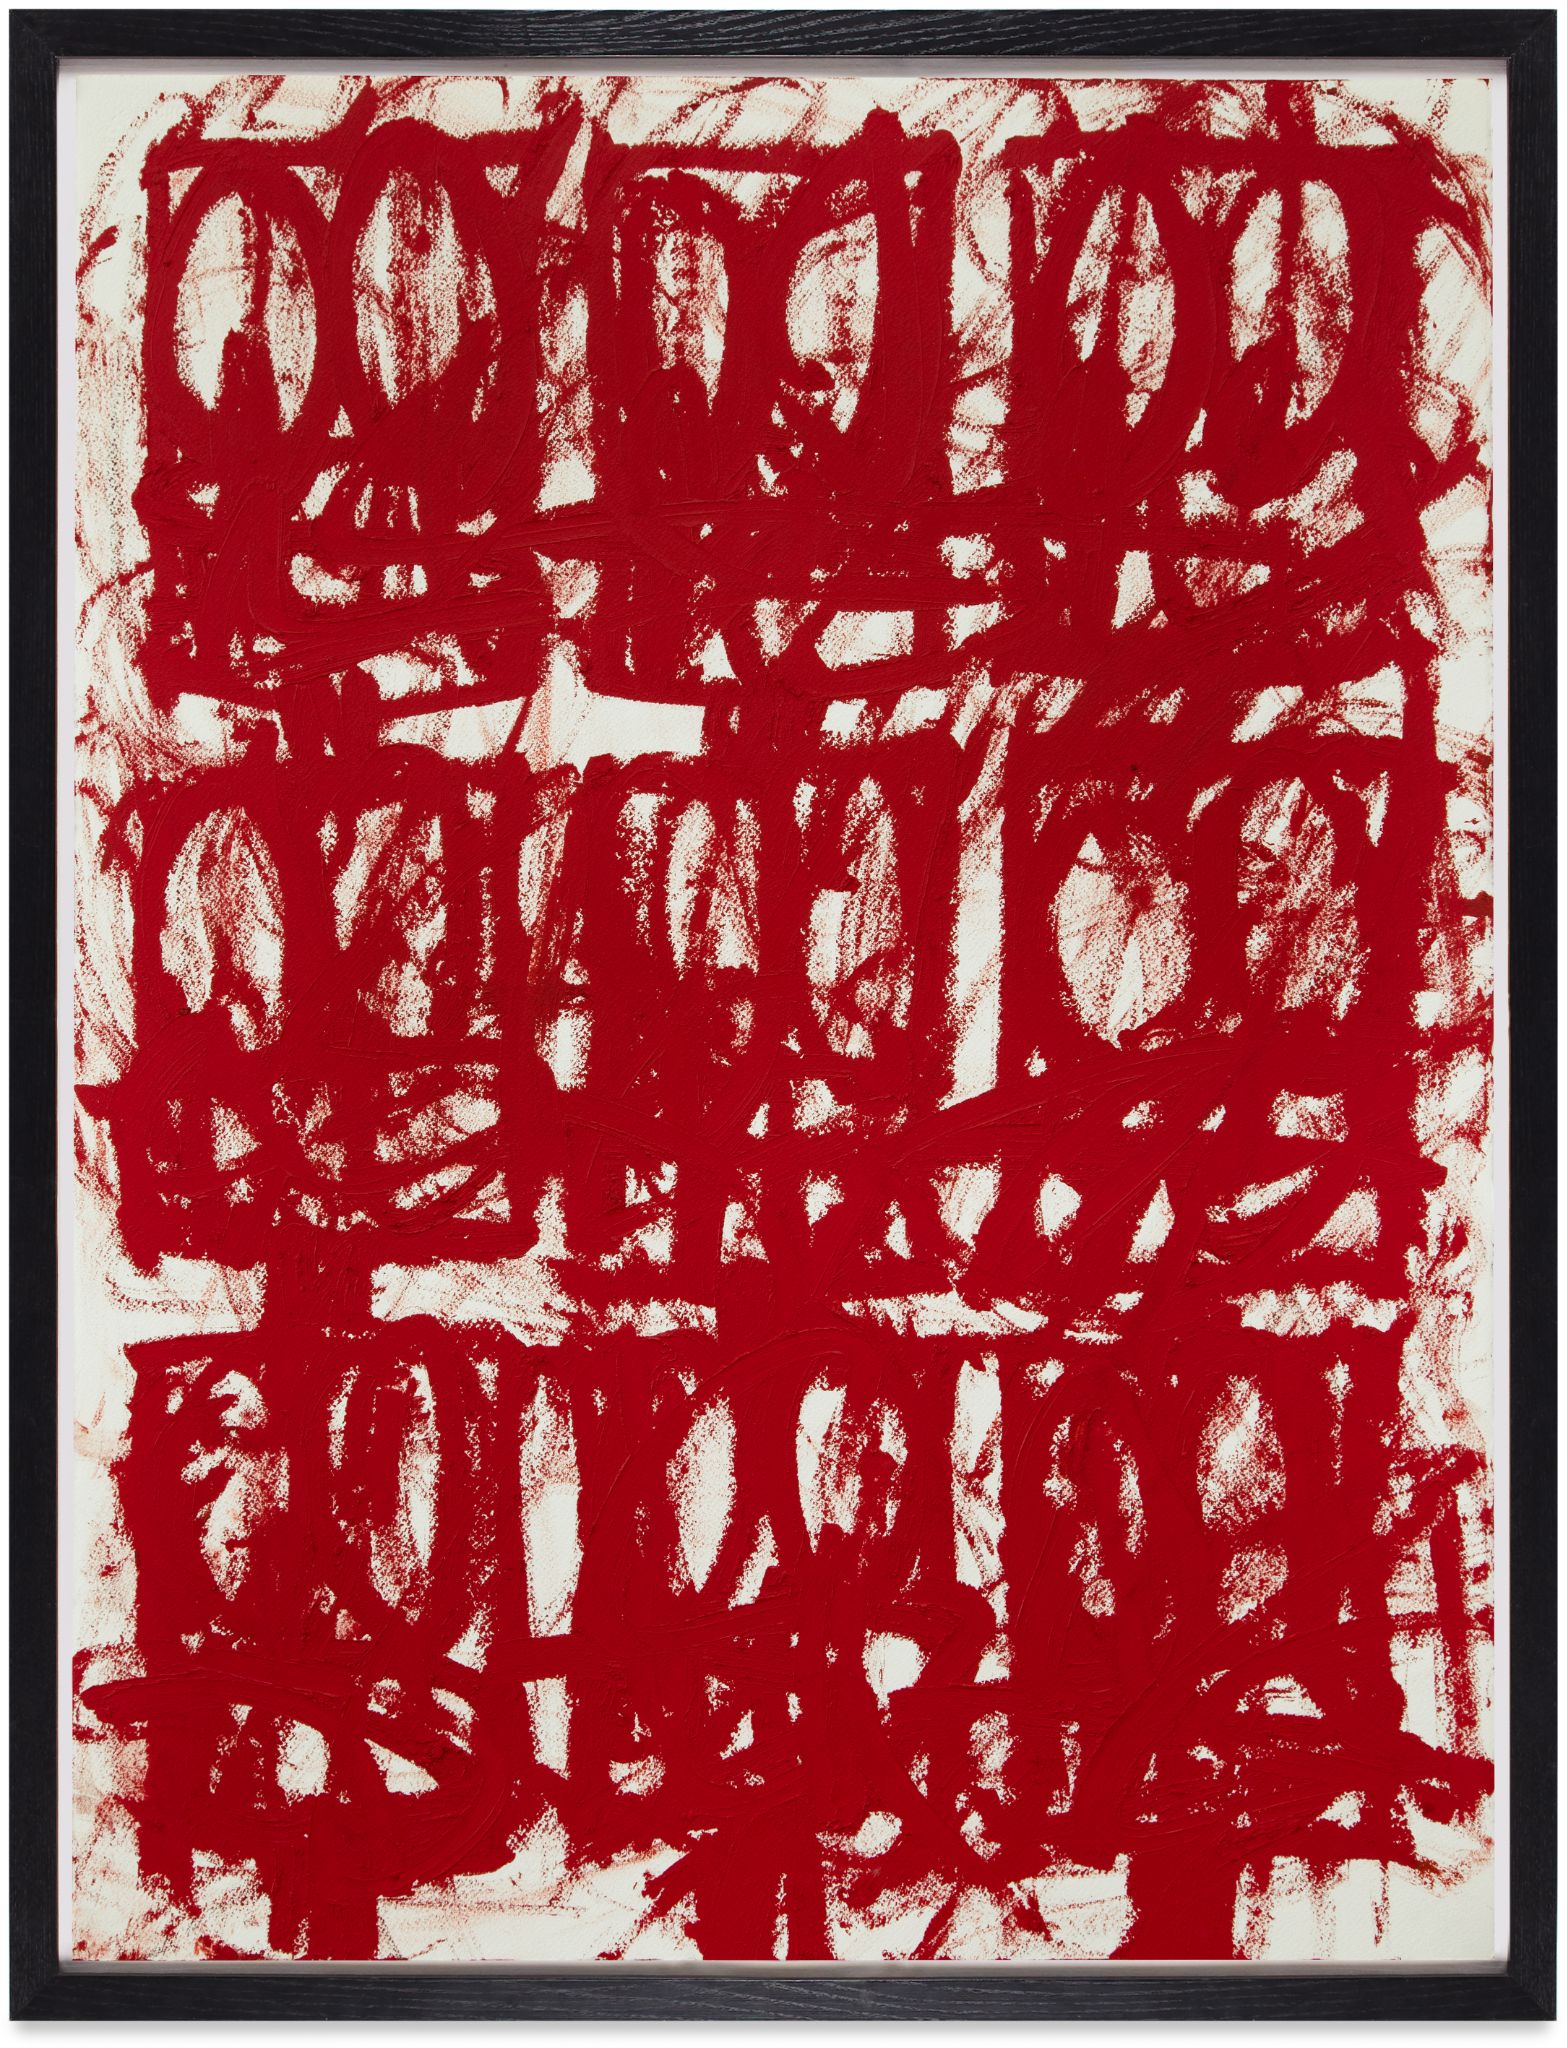 Rashid Johnson "Untitled Anxious Red Drawing" at Harper's East Hampton